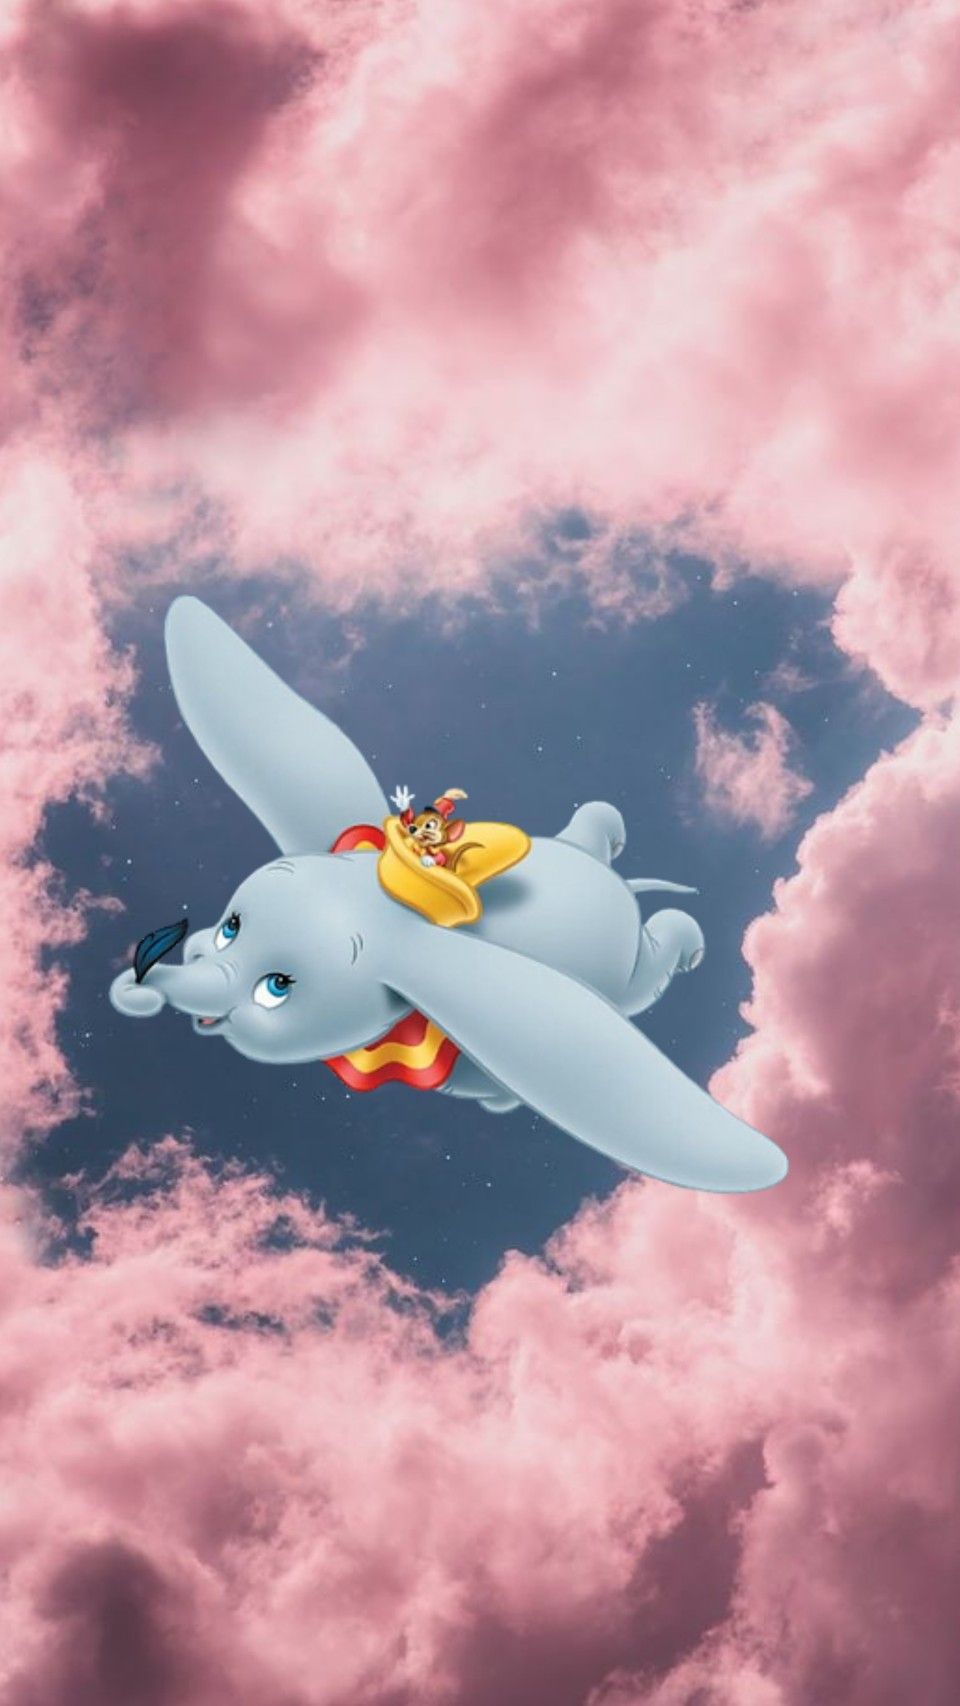 Dumbo Wallper Fondo De Pantalla Dibujos Animados Disney